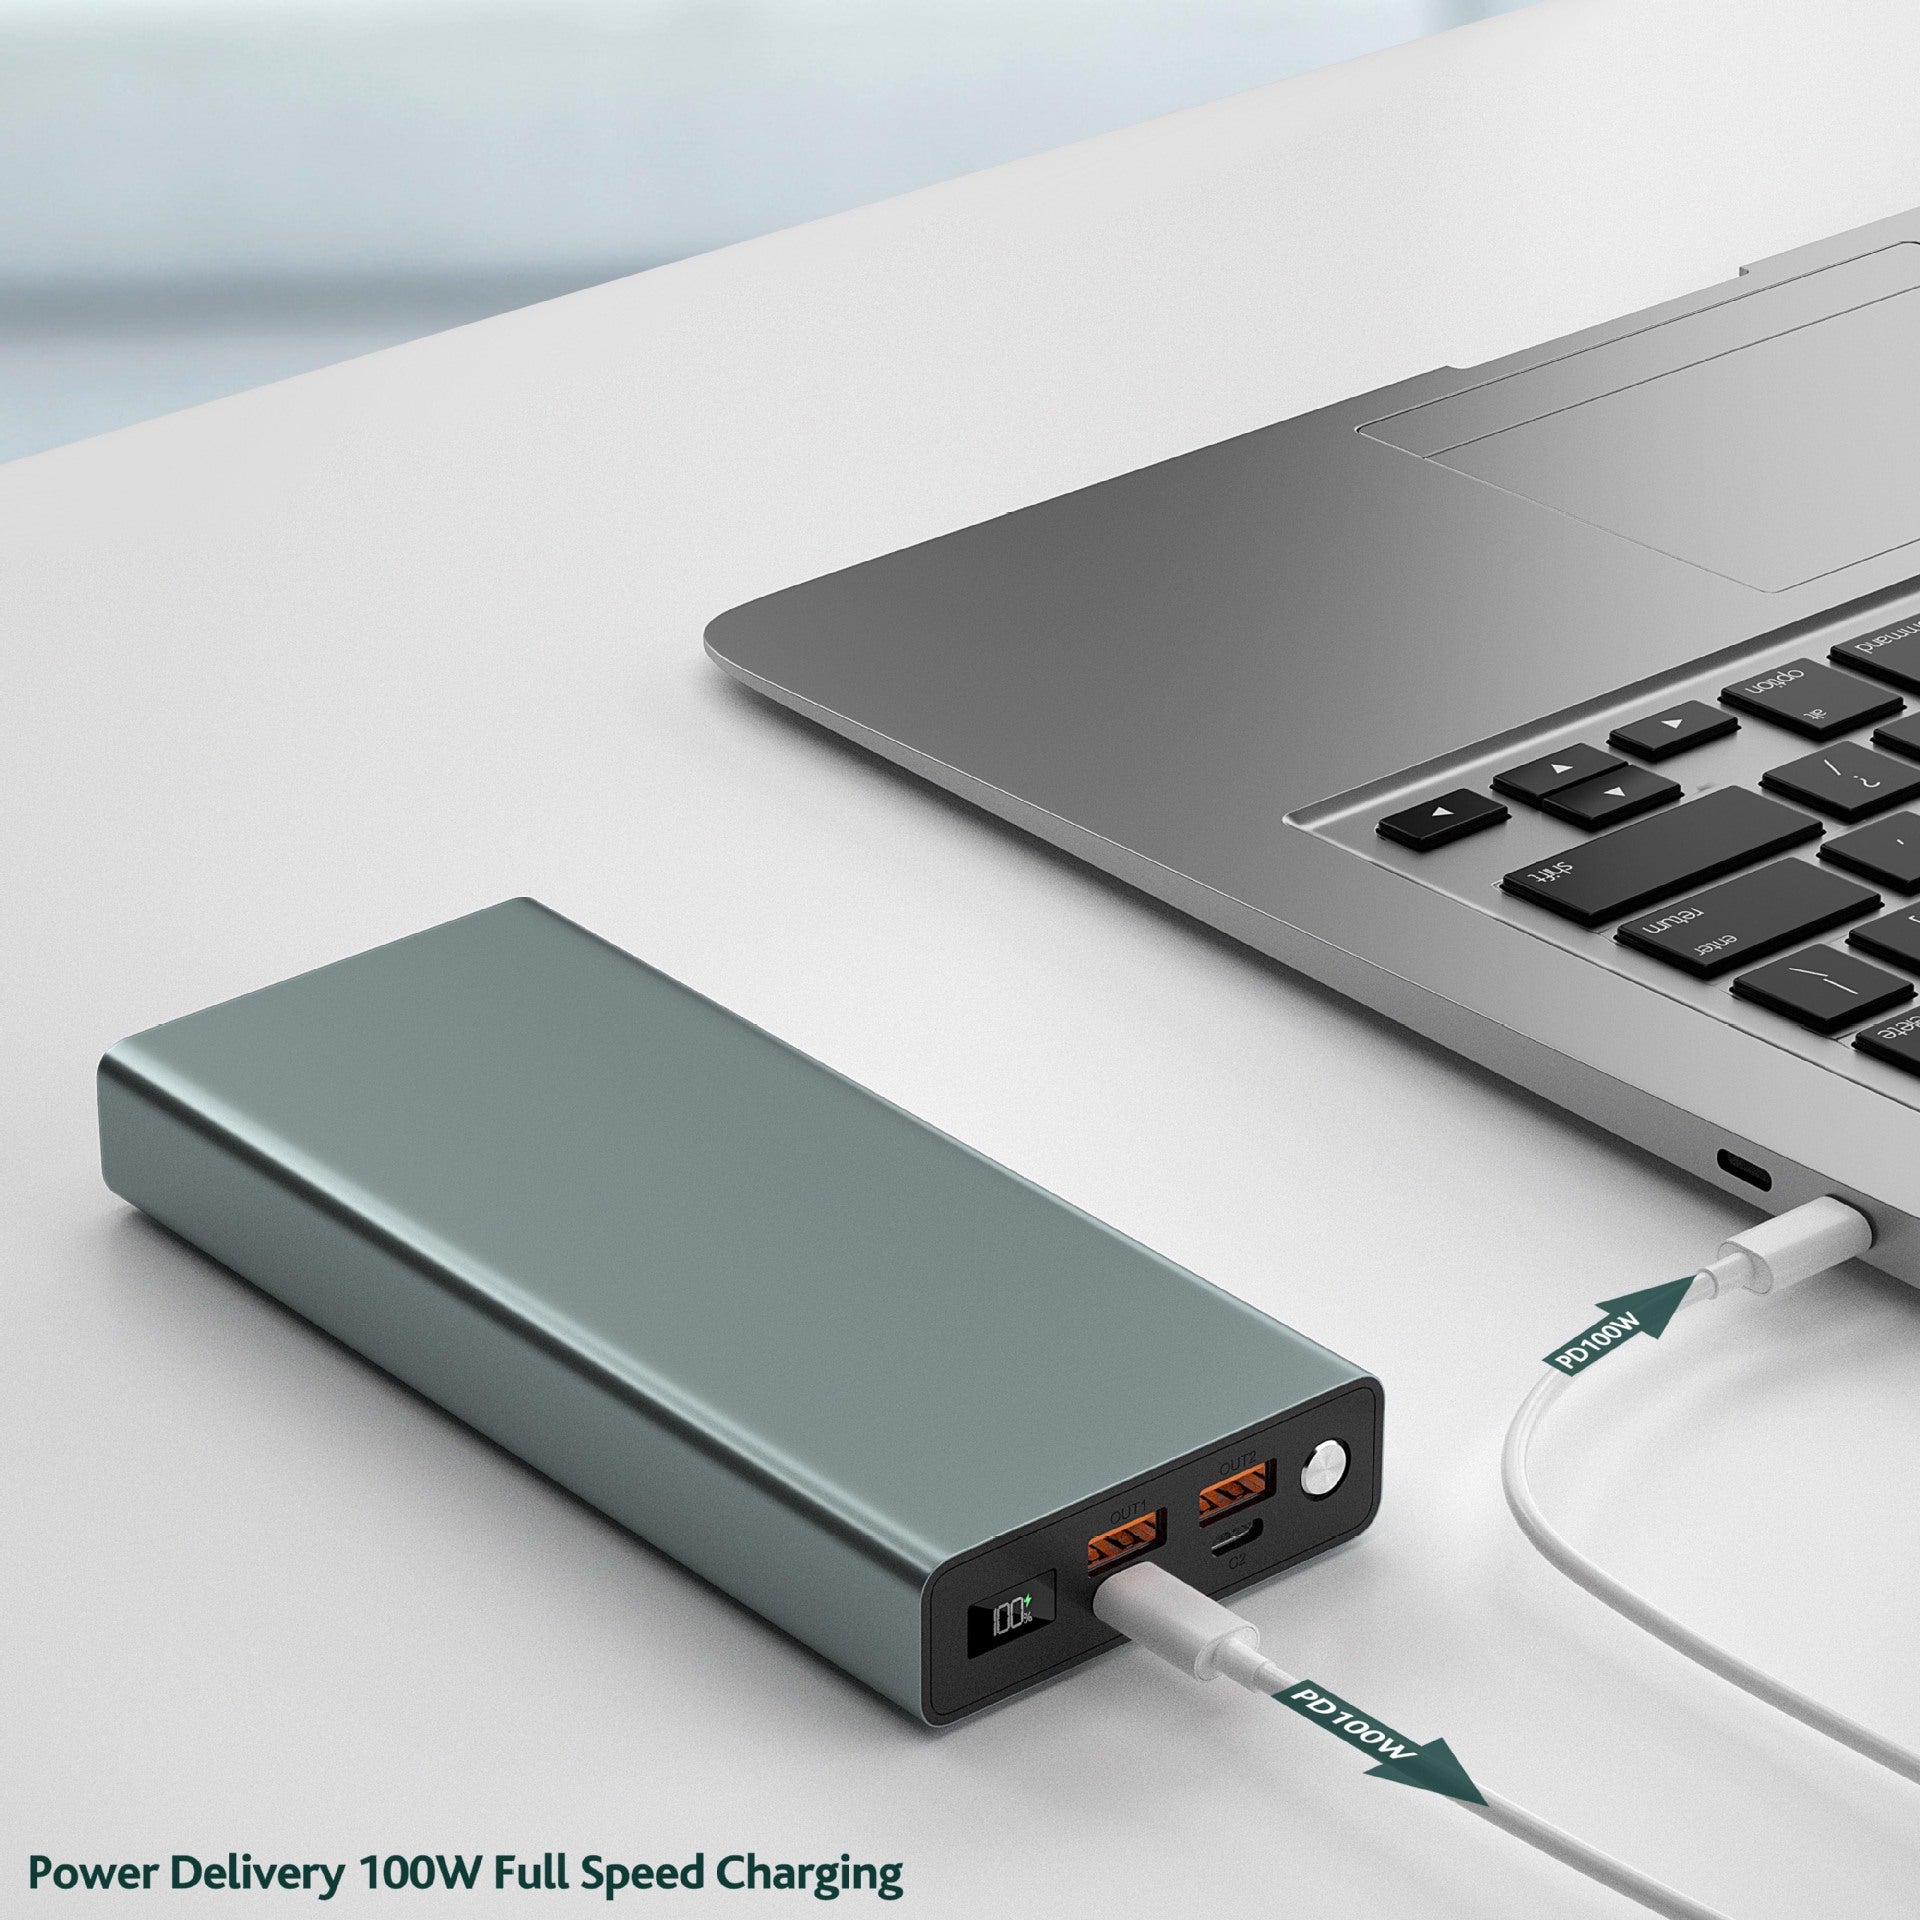 UUTEK PB178 100W super fast charging flash charging portable 30000 mAh laptop/mobile phone power bank